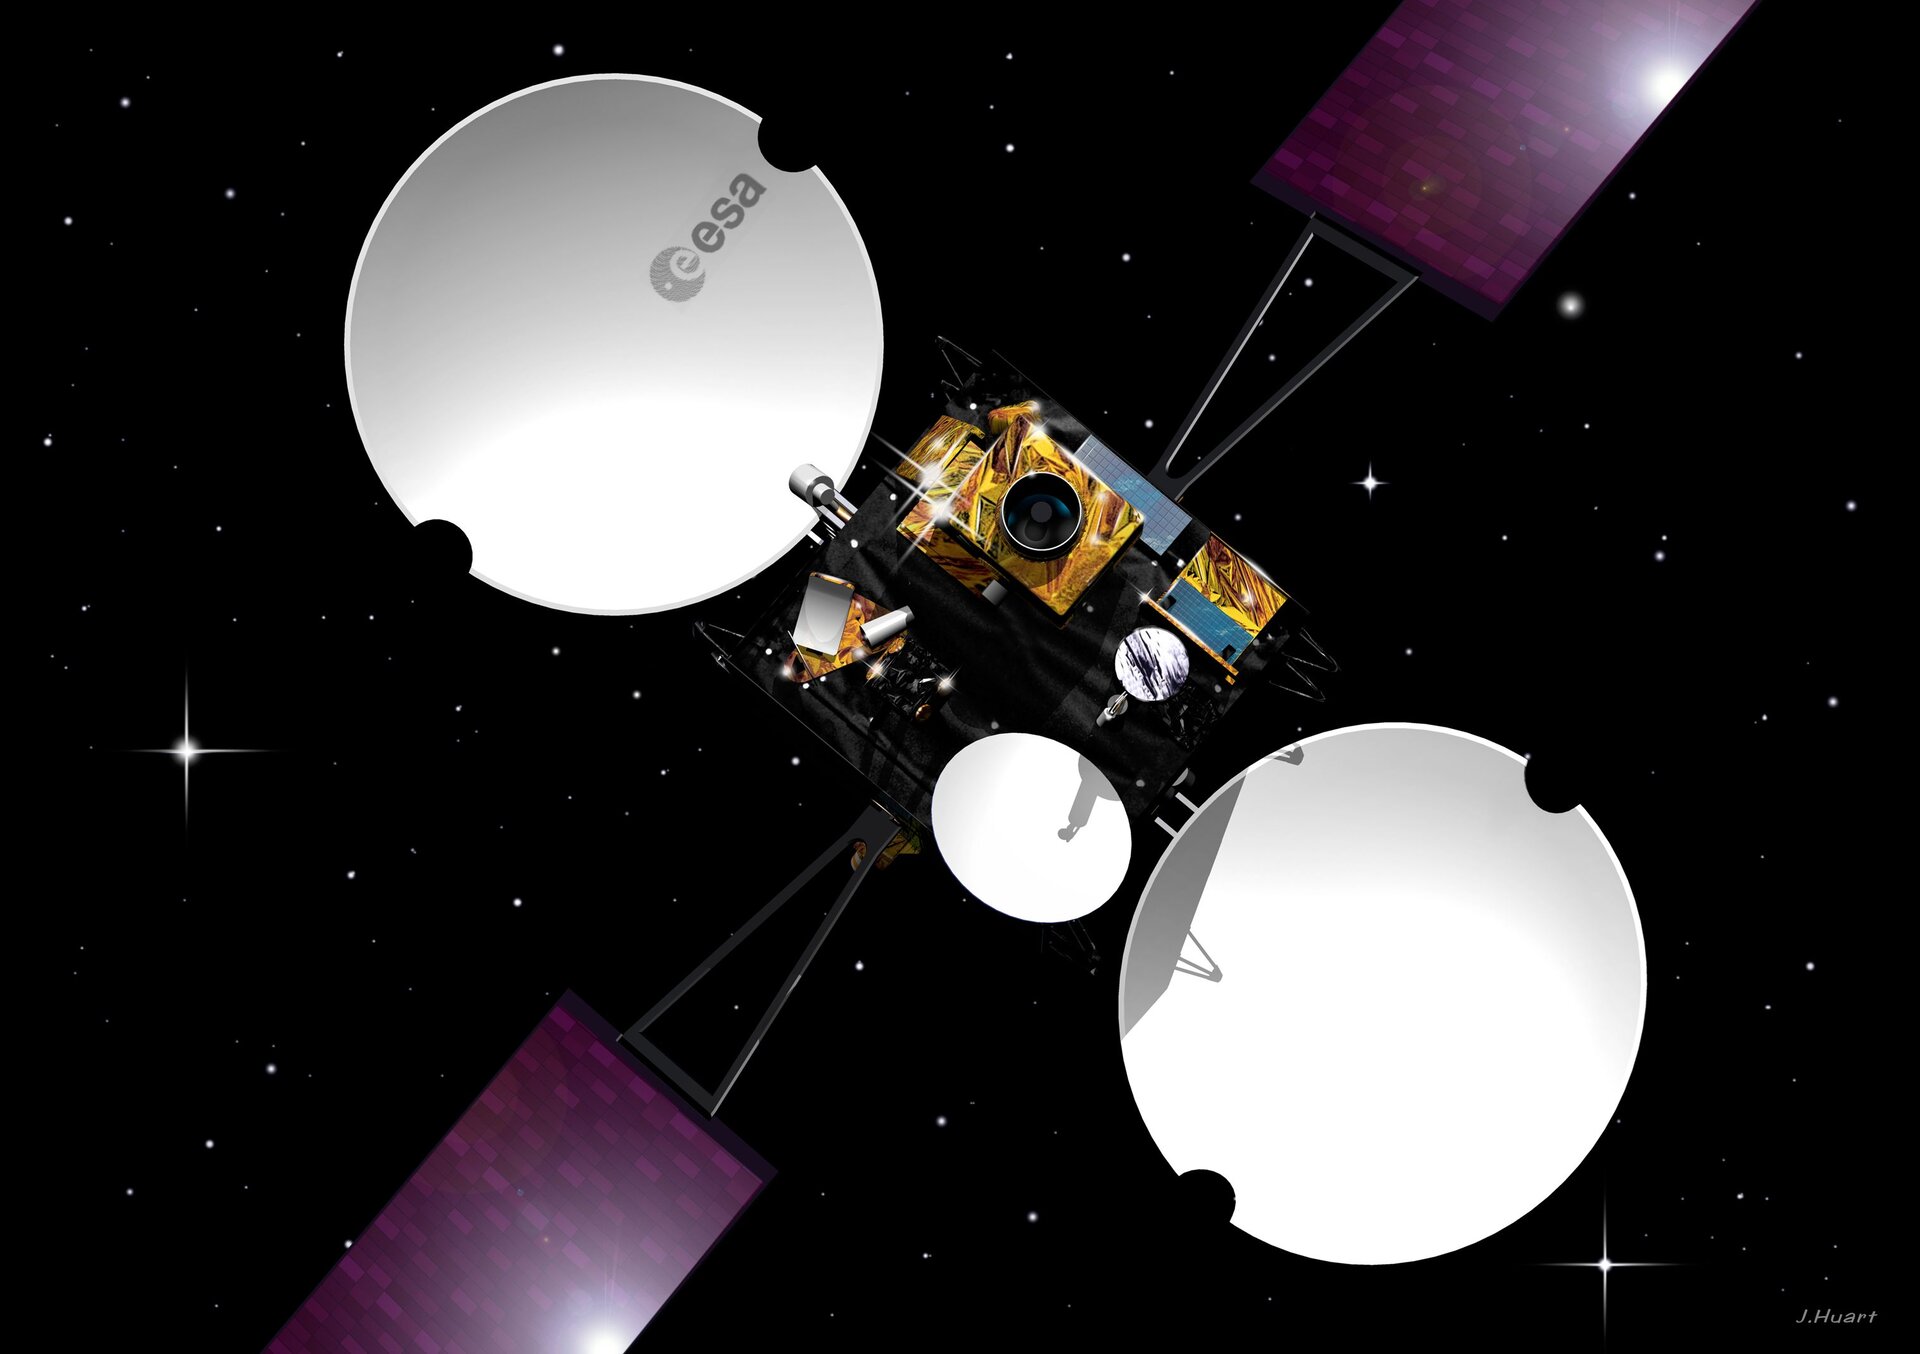 Satellites access remotely stored navigation information